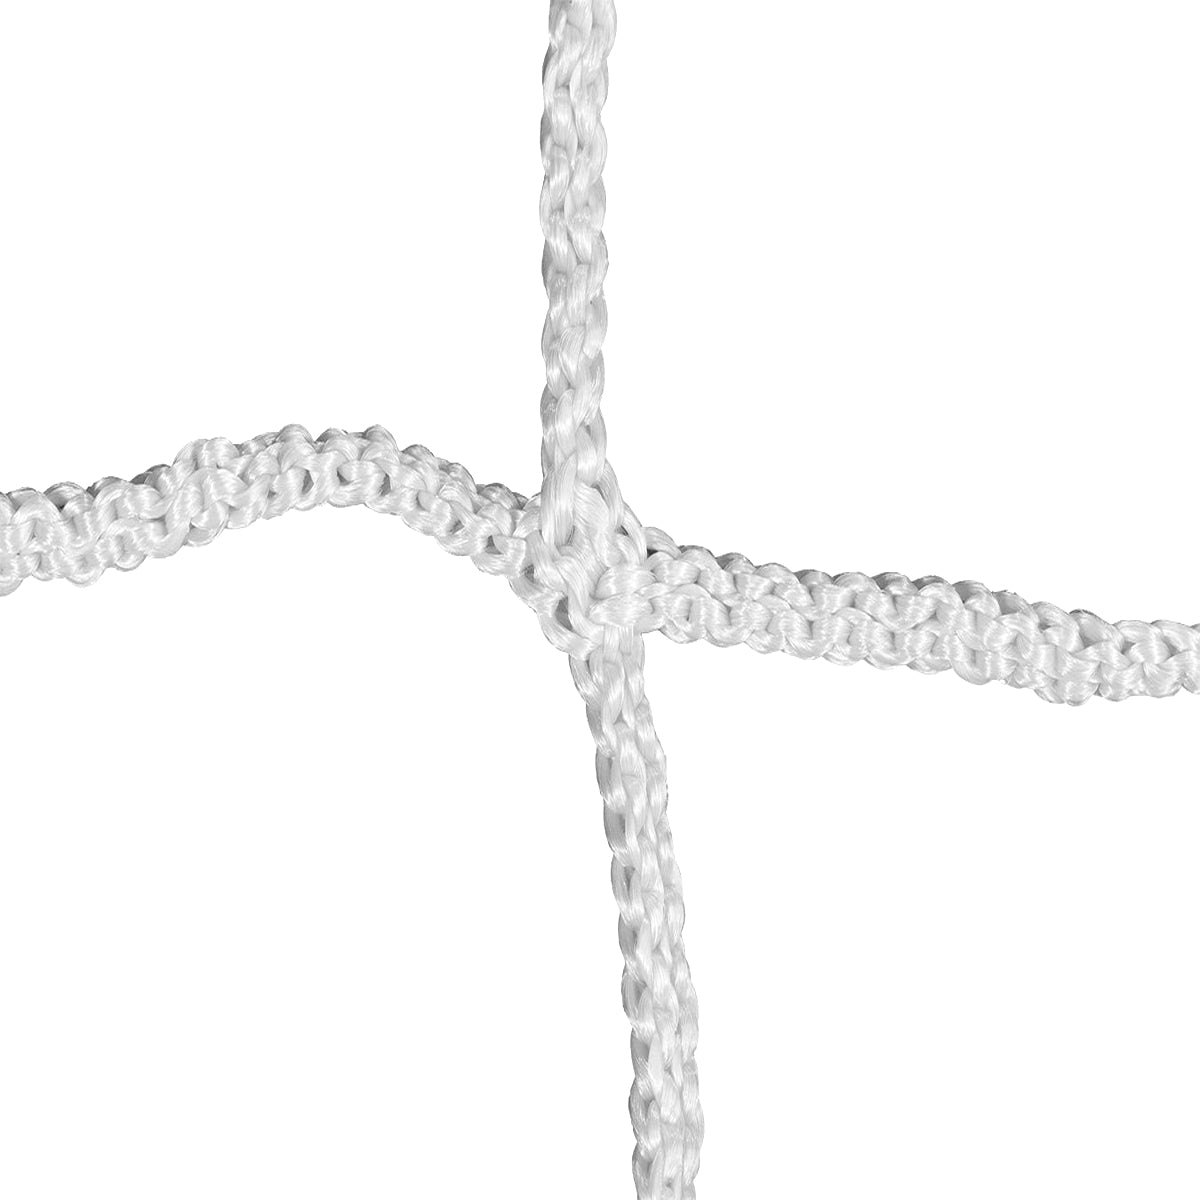 Kwikgoal 3mm Solid Braid Knotless Net | 3B26 Nets Kwikgoal 